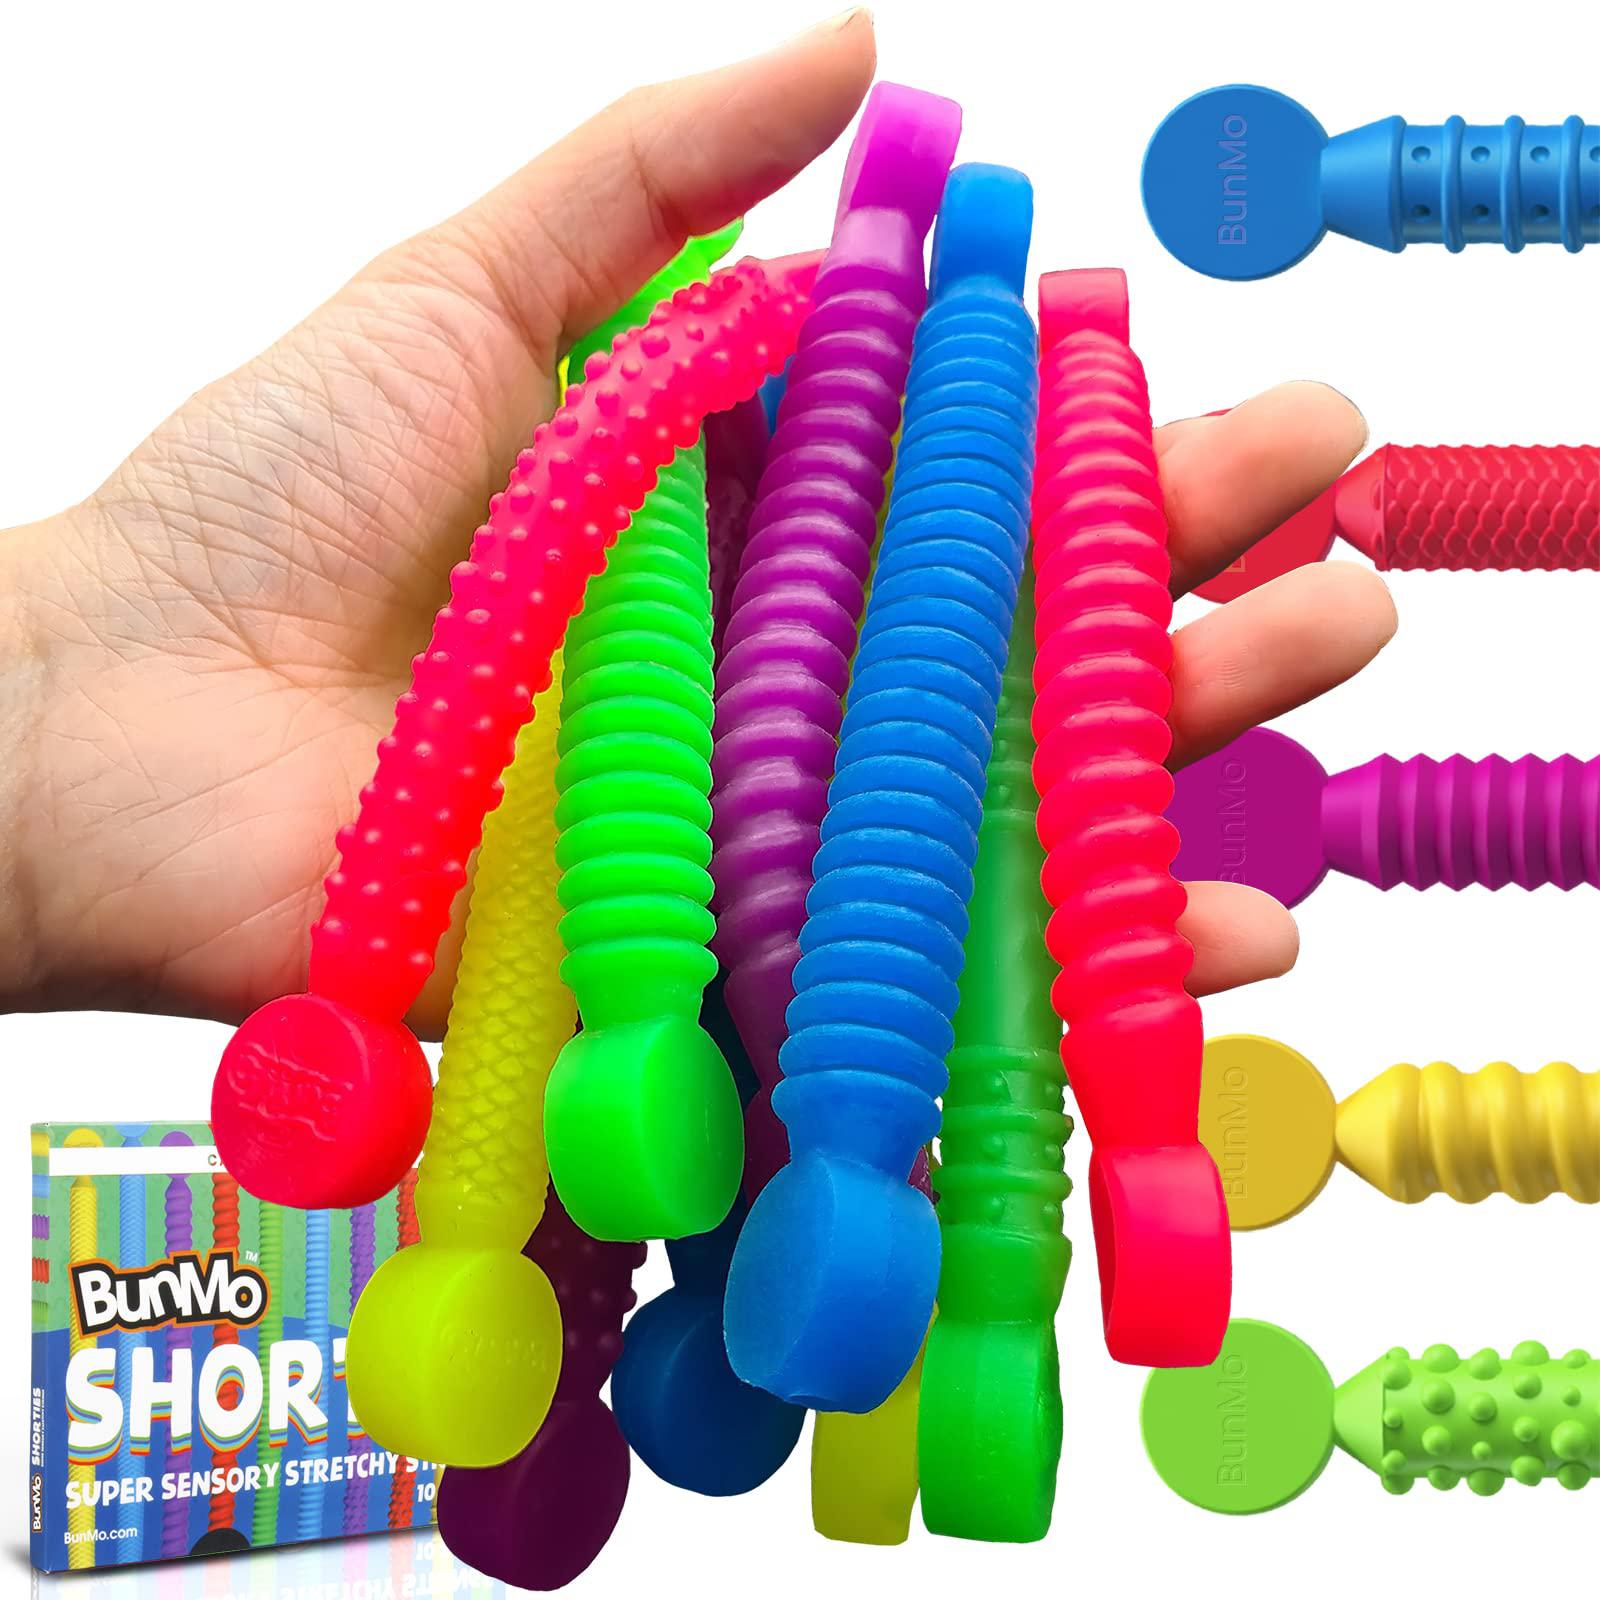 bunmo shorties sensory toys monkey noodles. 10pk short sensory toys for kids 5-7 & sensory toys for kids 8-12. monkey noodles